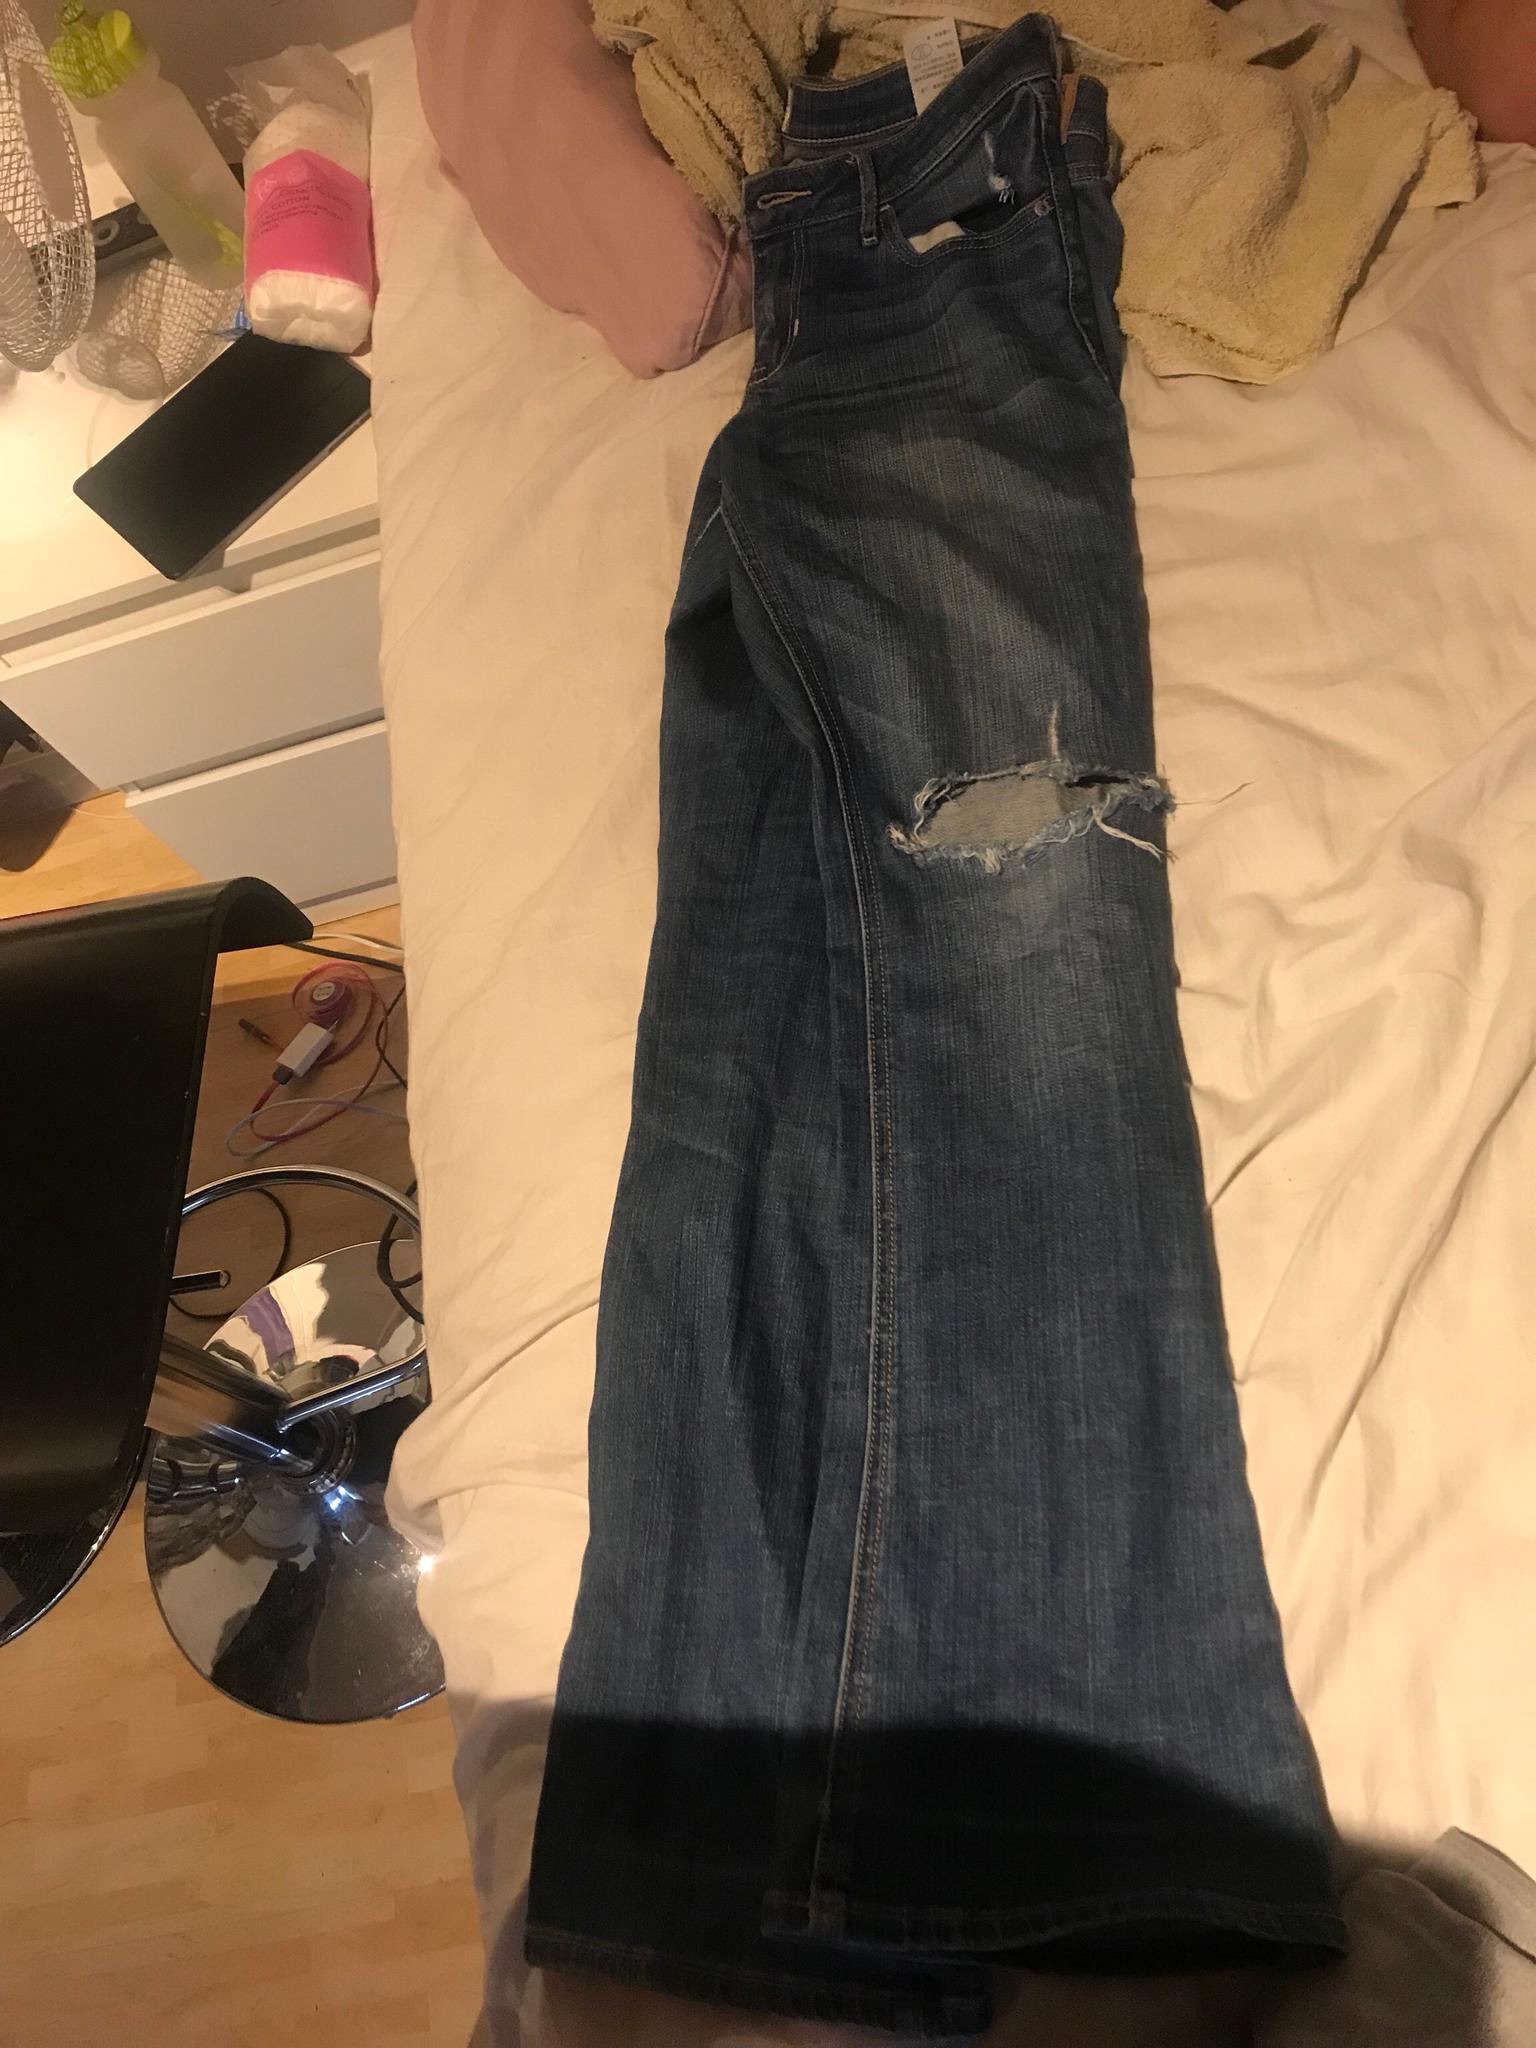 hollister bootcut jeans mens